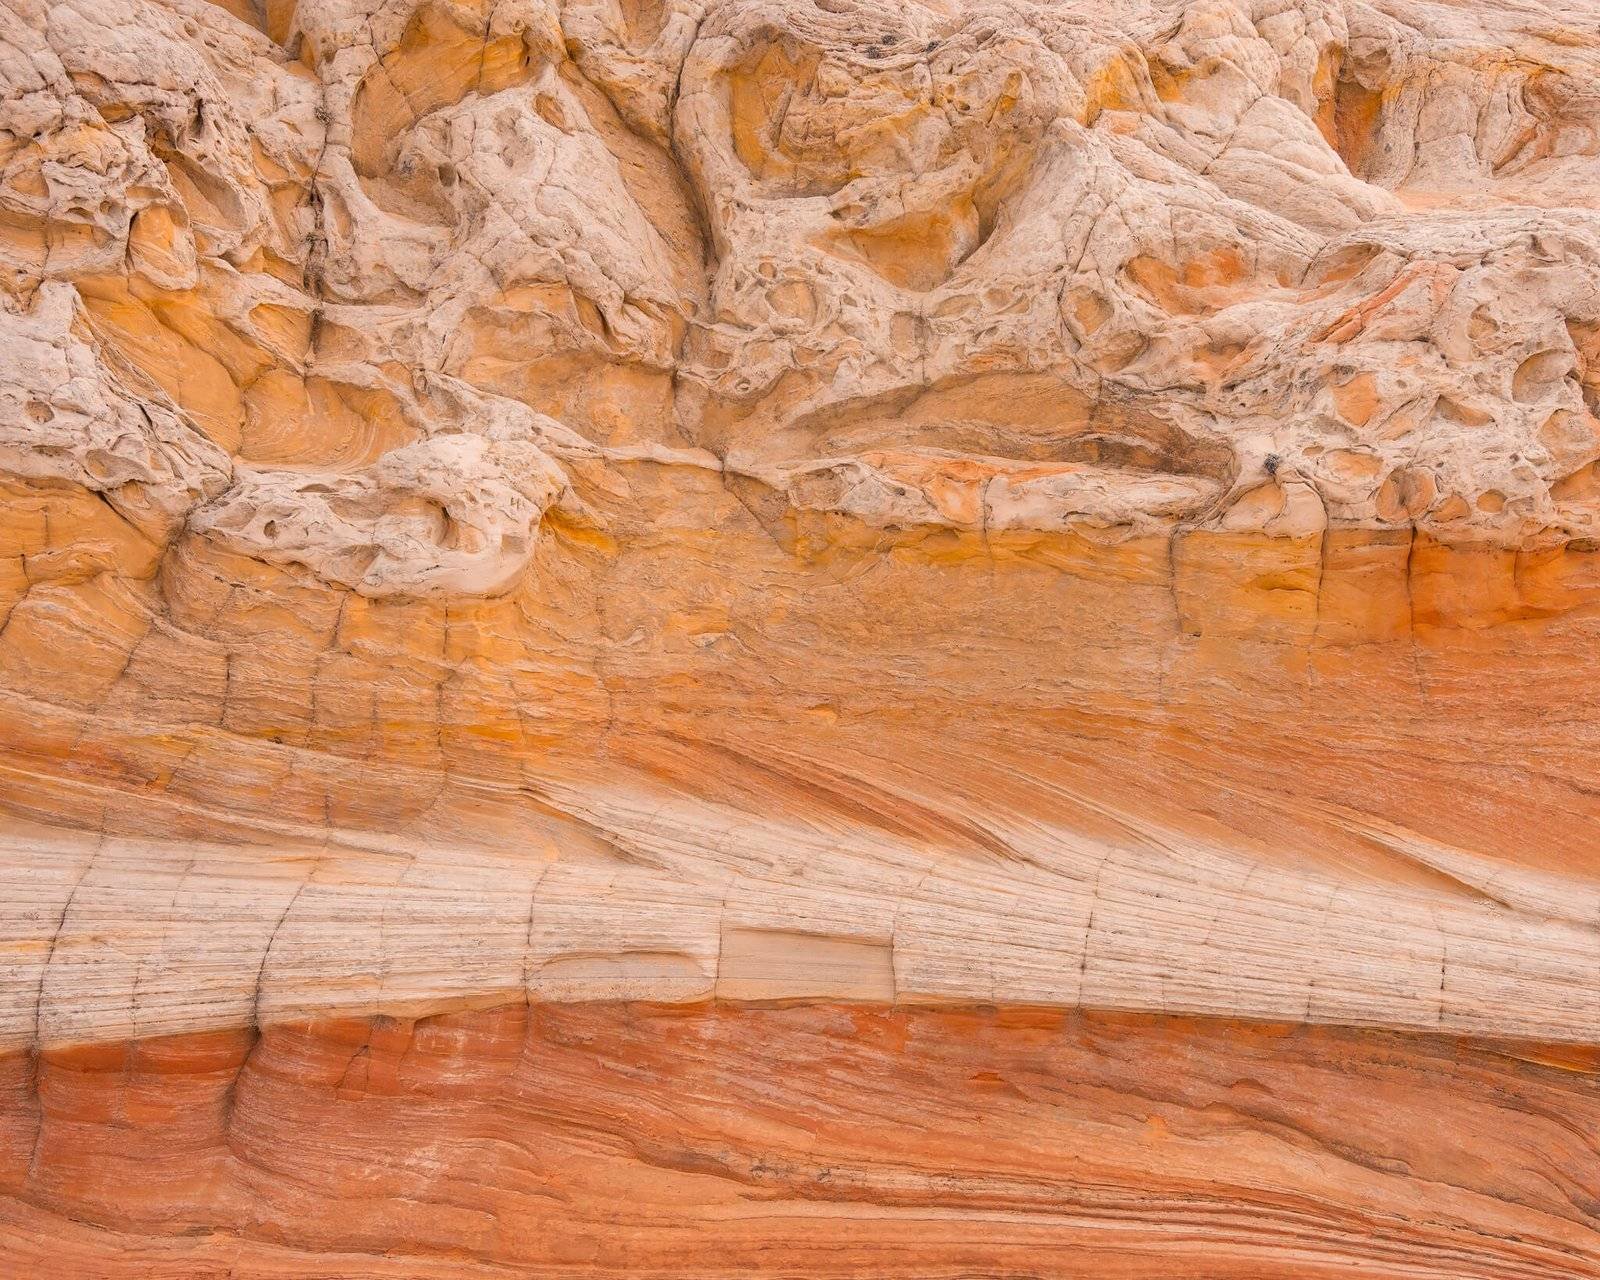 intimate landscape photography taken in the Arizona Desert